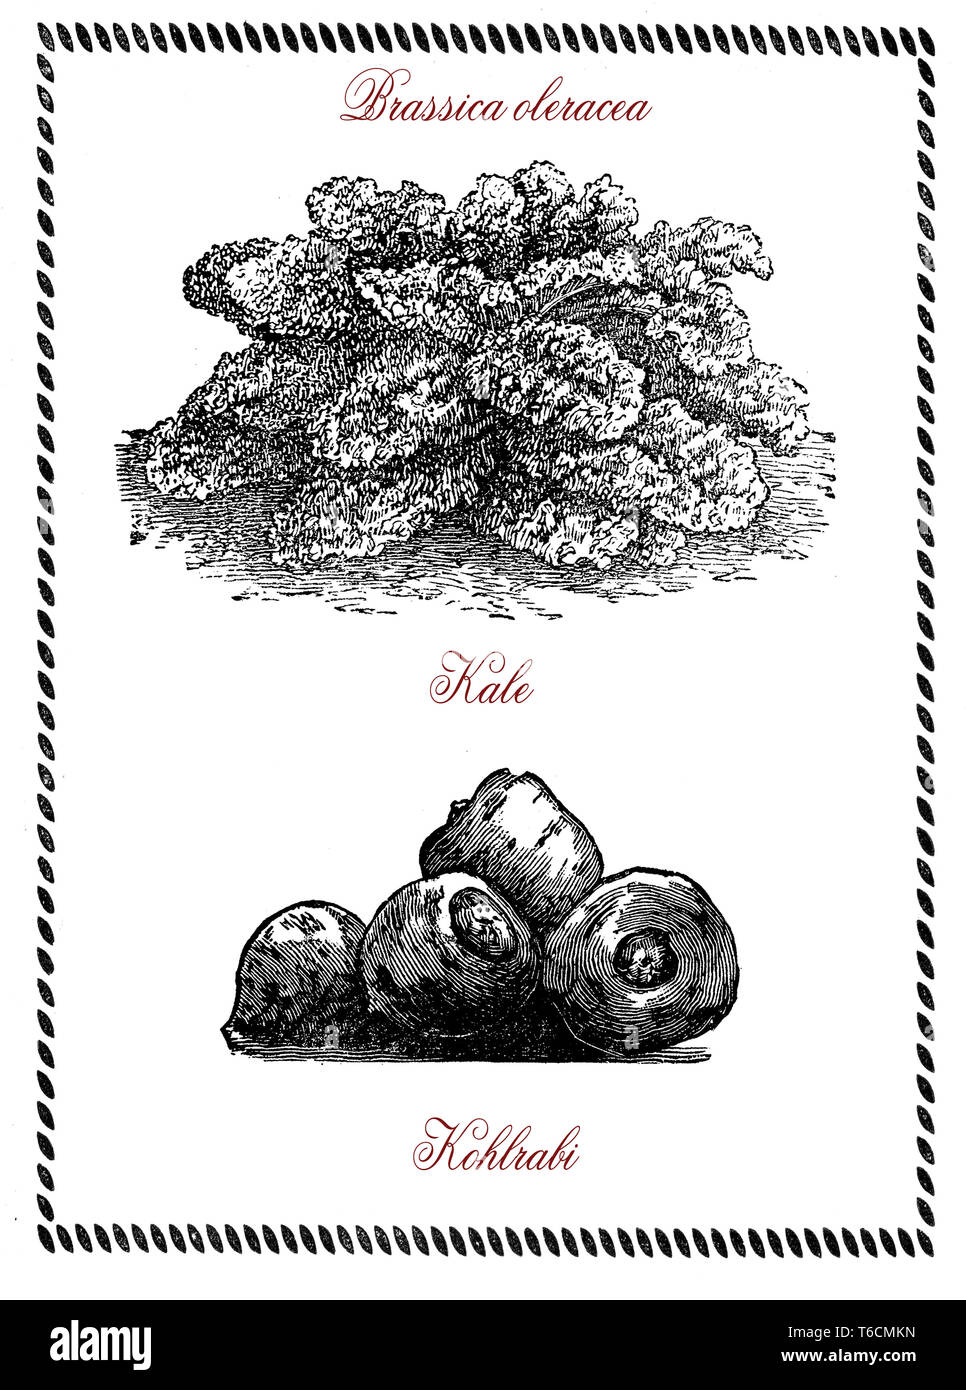 Botanical illustration of two kind of brassica oleracea: kohlabi and kale or leaf cabbage edible vegetables Stock Photo